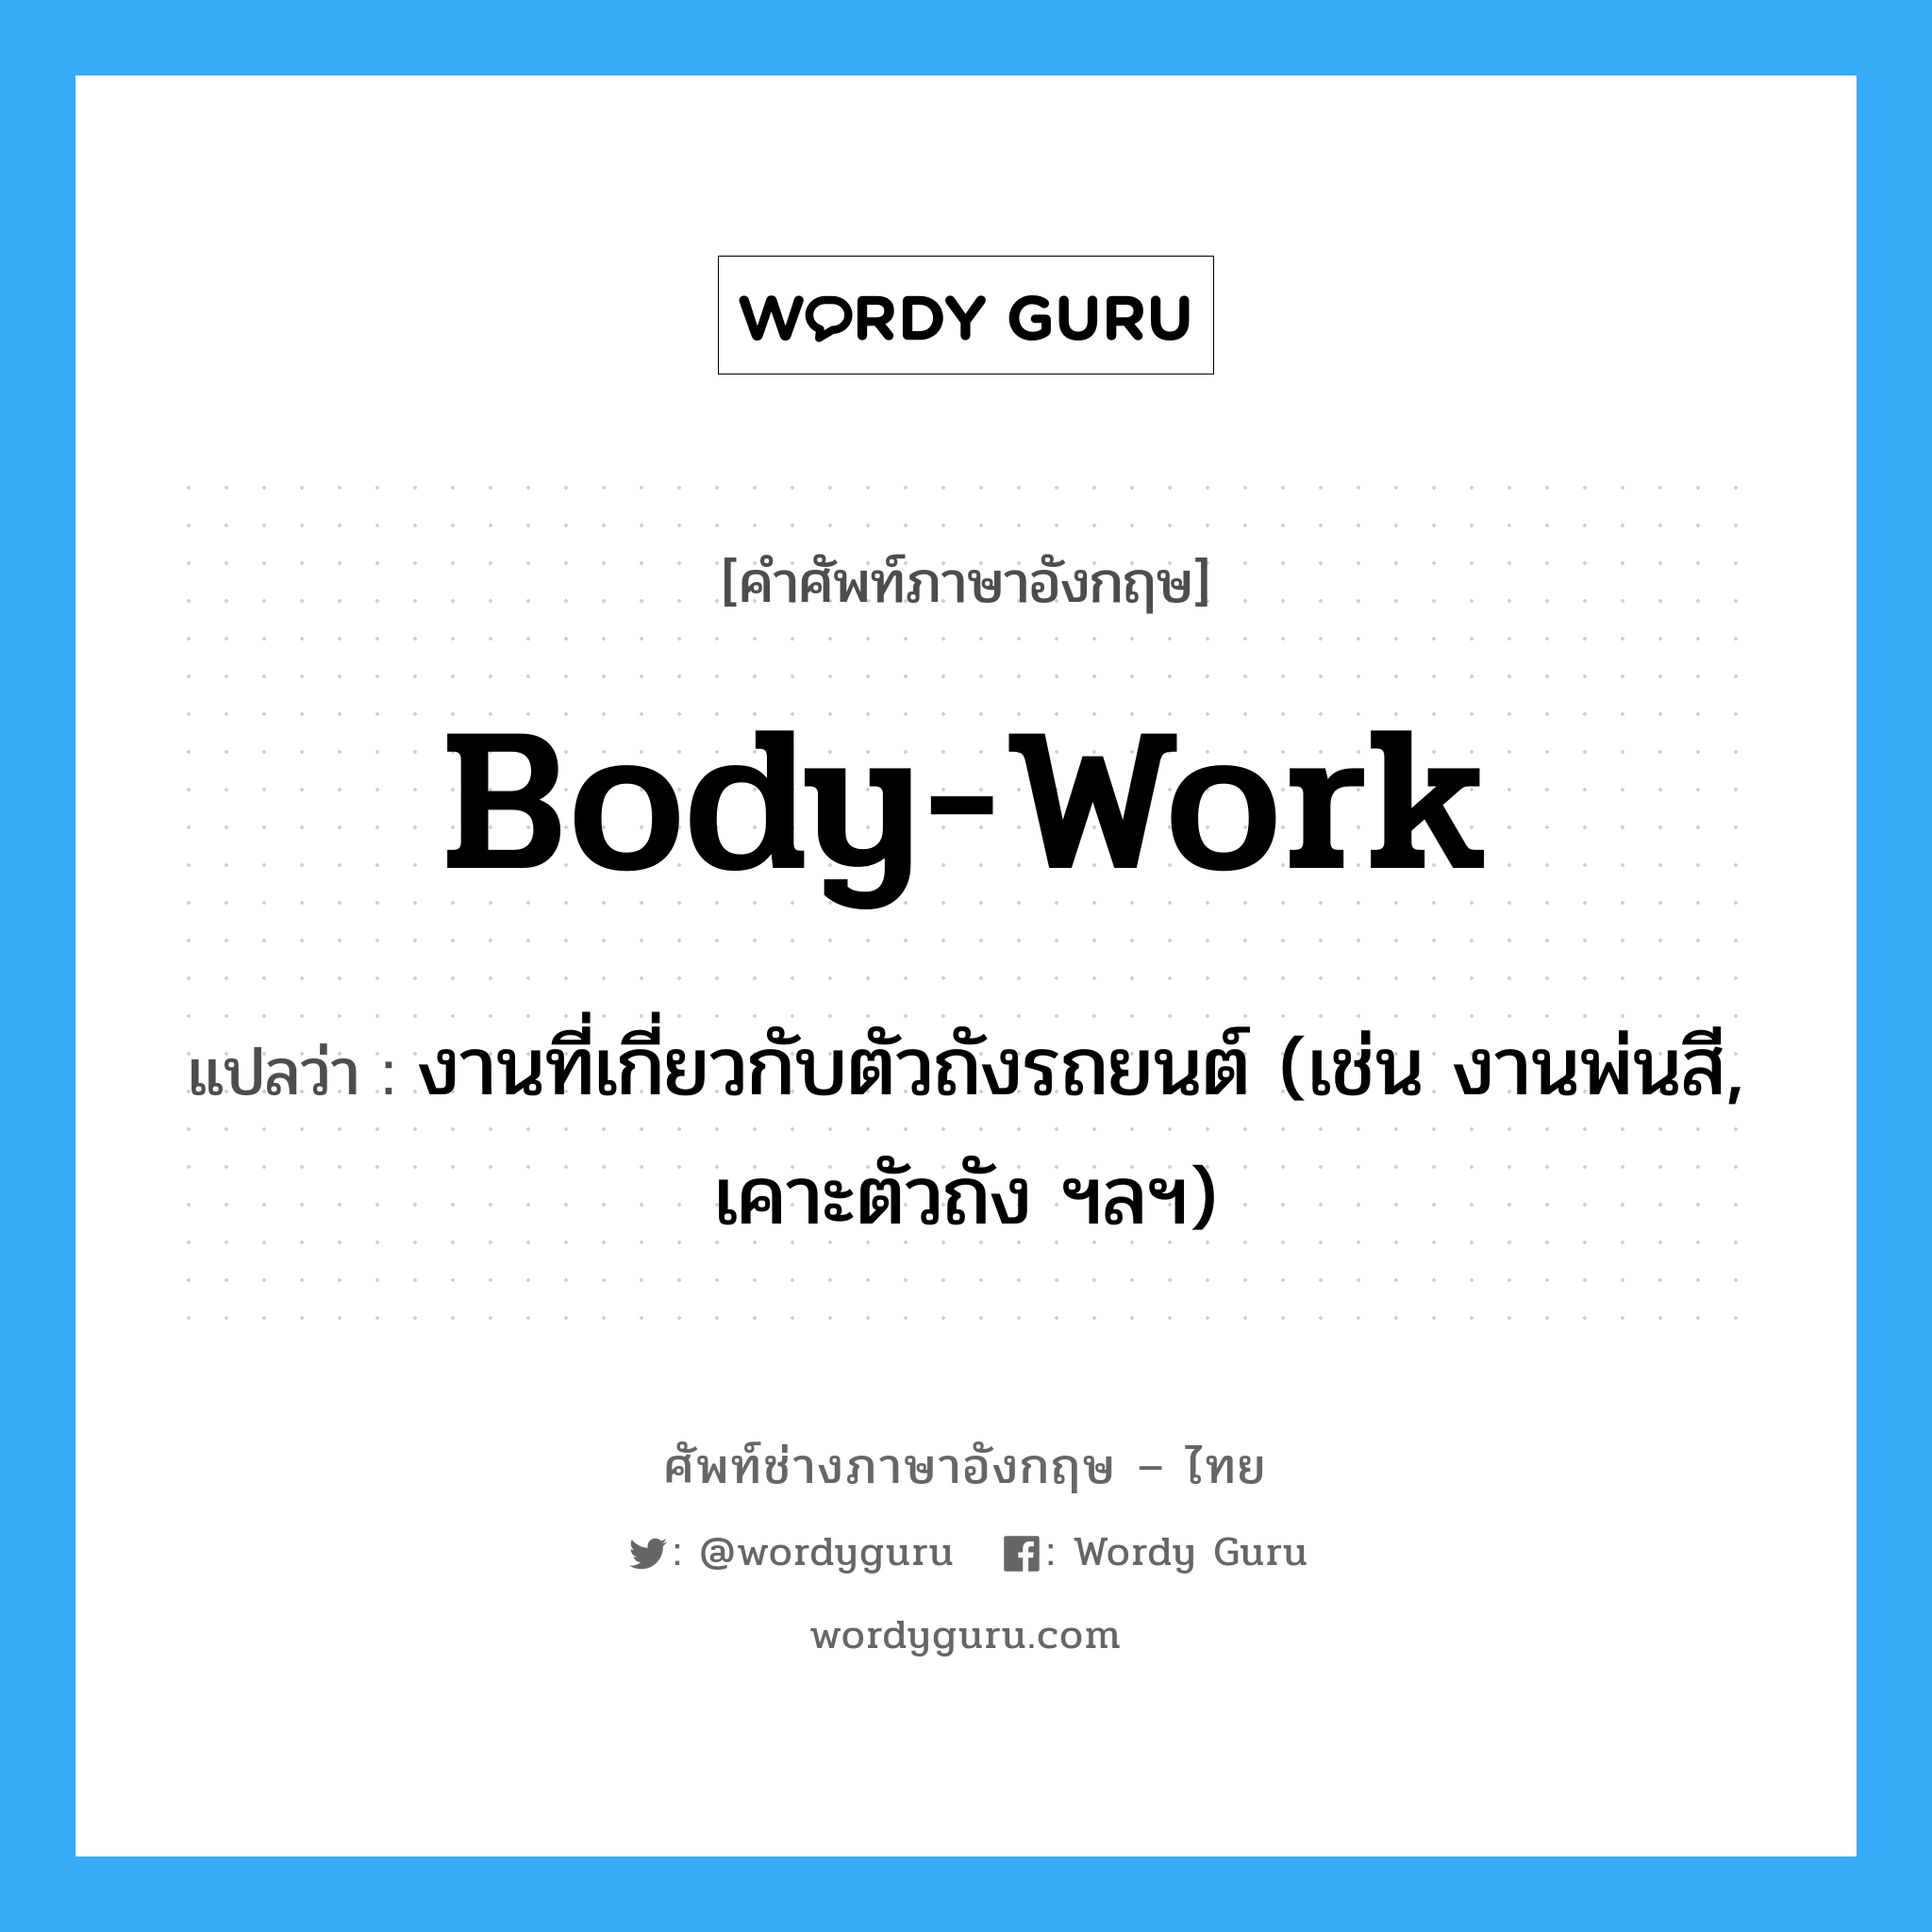 body-work แปลว่า?, คำศัพท์ช่างภาษาอังกฤษ - ไทย body-work คำศัพท์ภาษาอังกฤษ body-work แปลว่า งานที่เกี่ยวกับตัวถังรถยนต์ (เช่น งานพ่นสี, เคาะตัวถัง ฯลฯ)